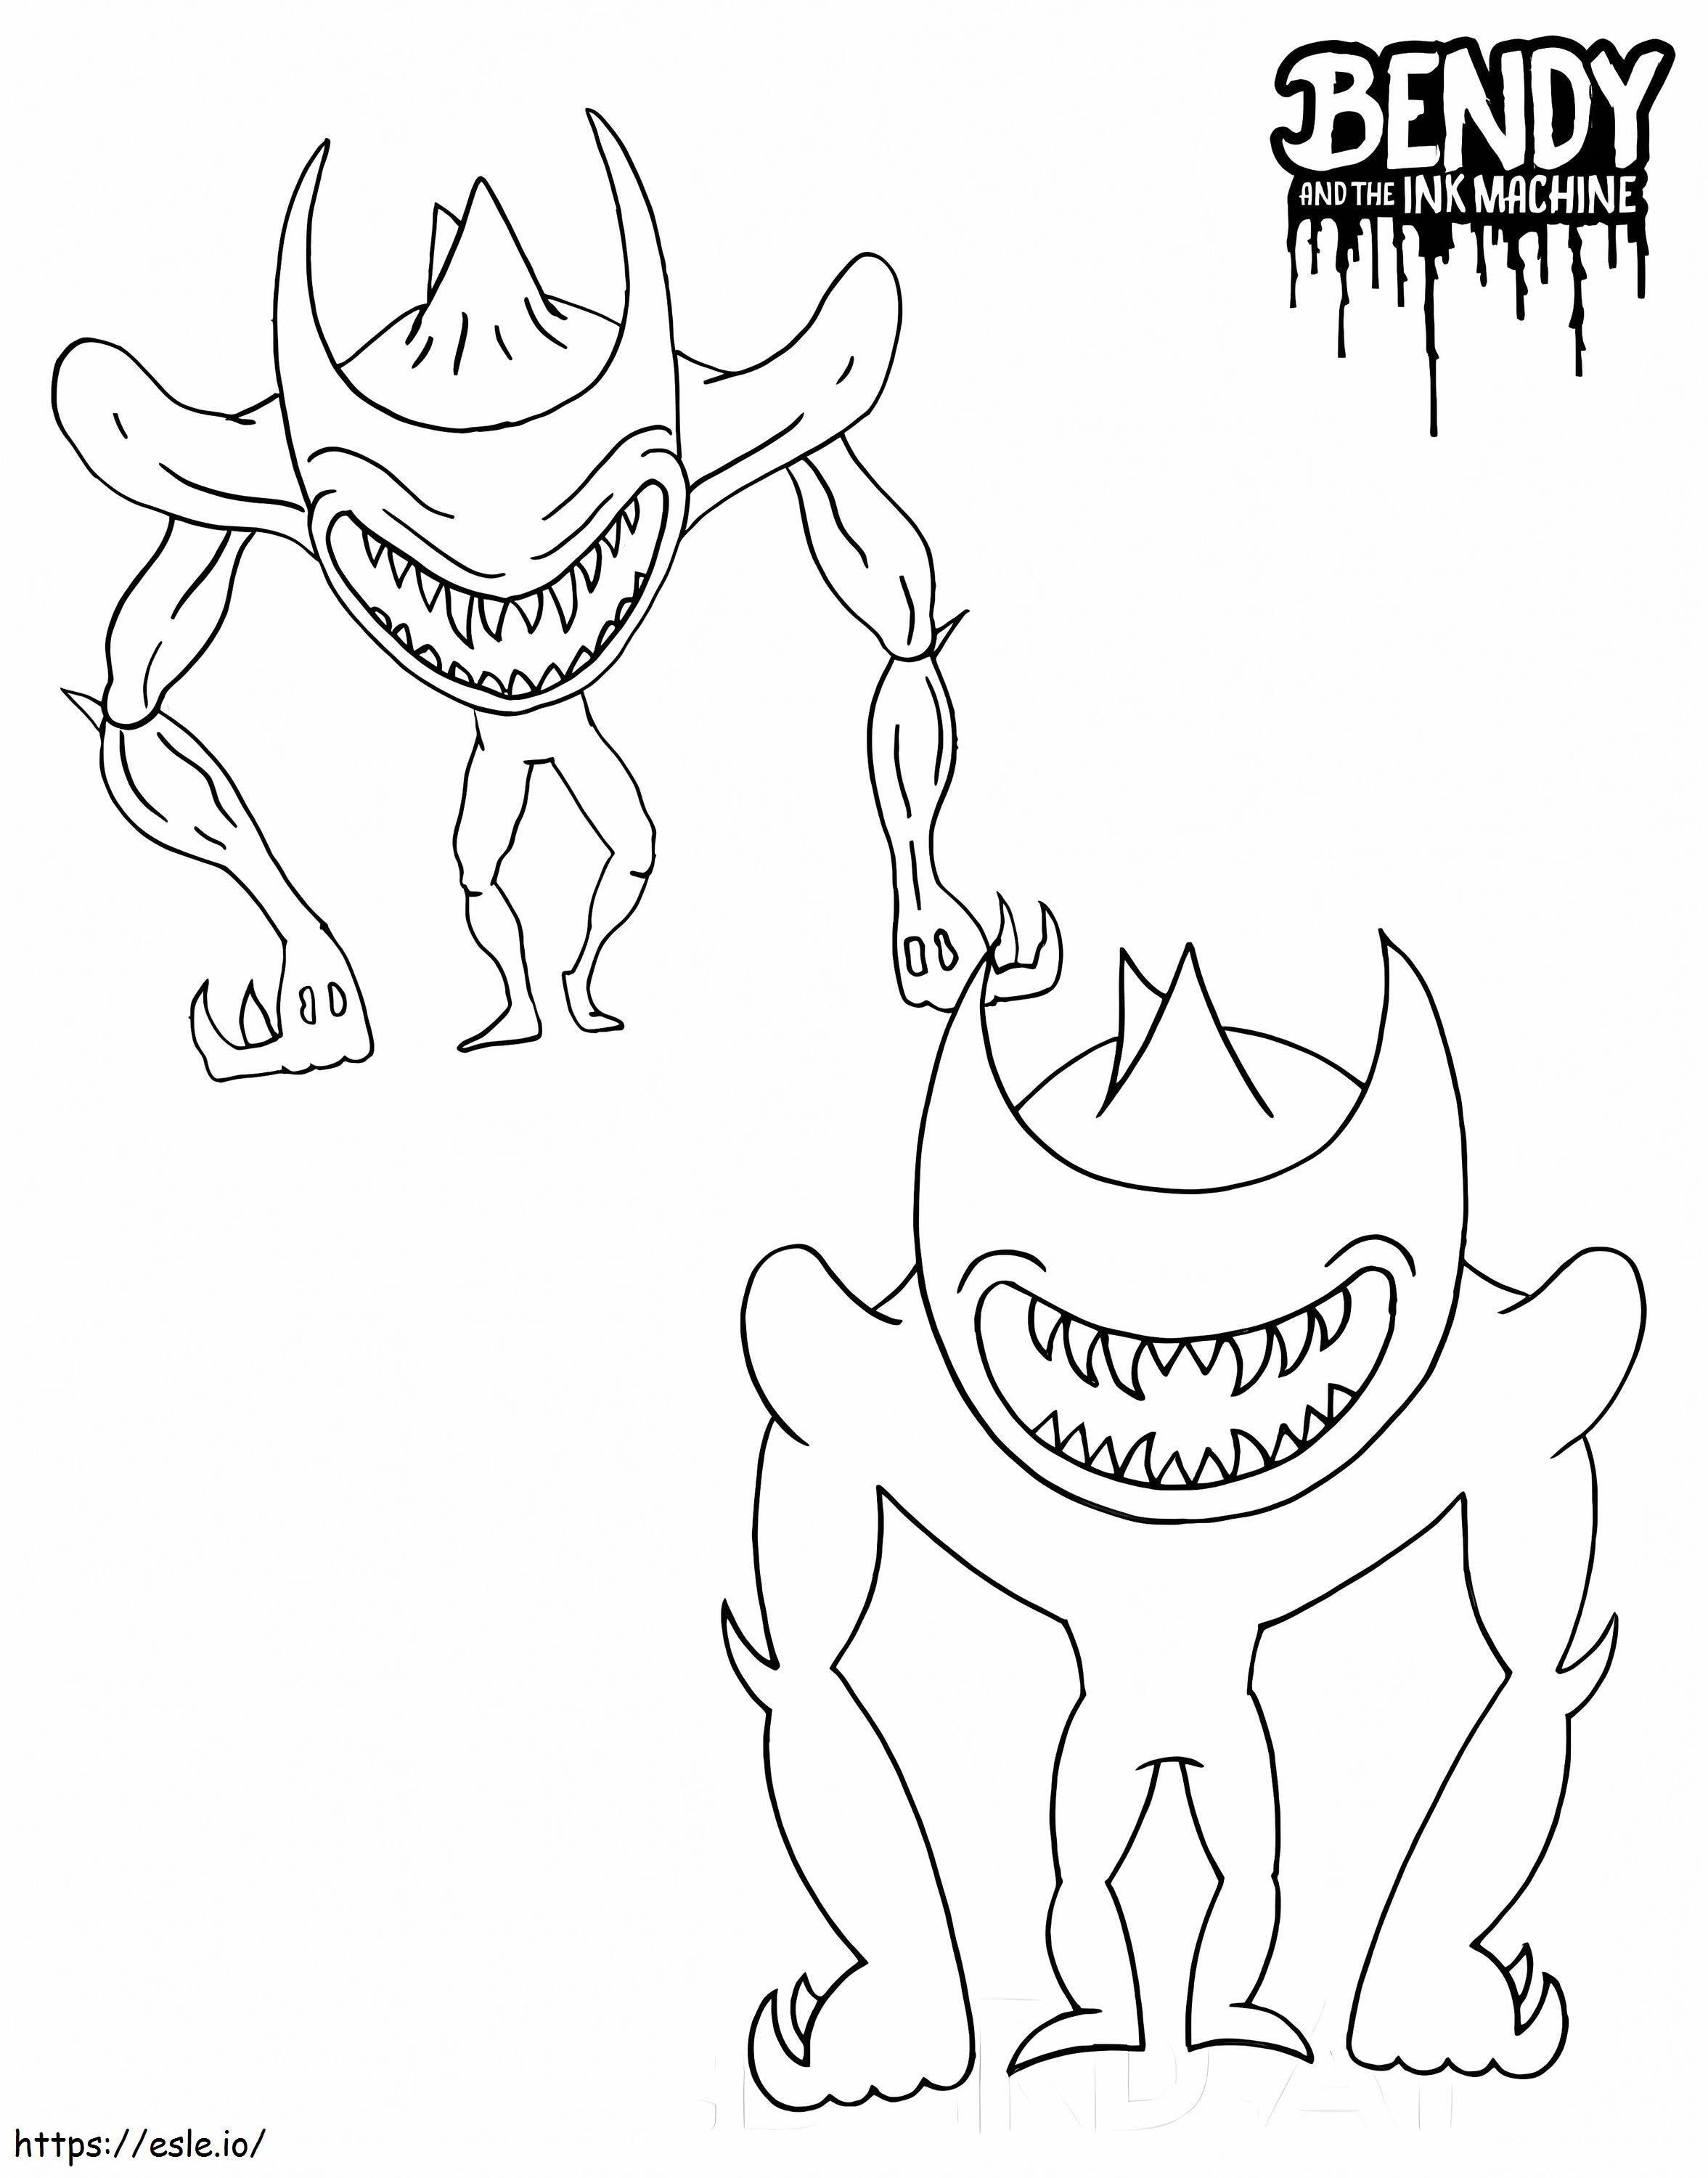 Demon Beast Bendy coloring page